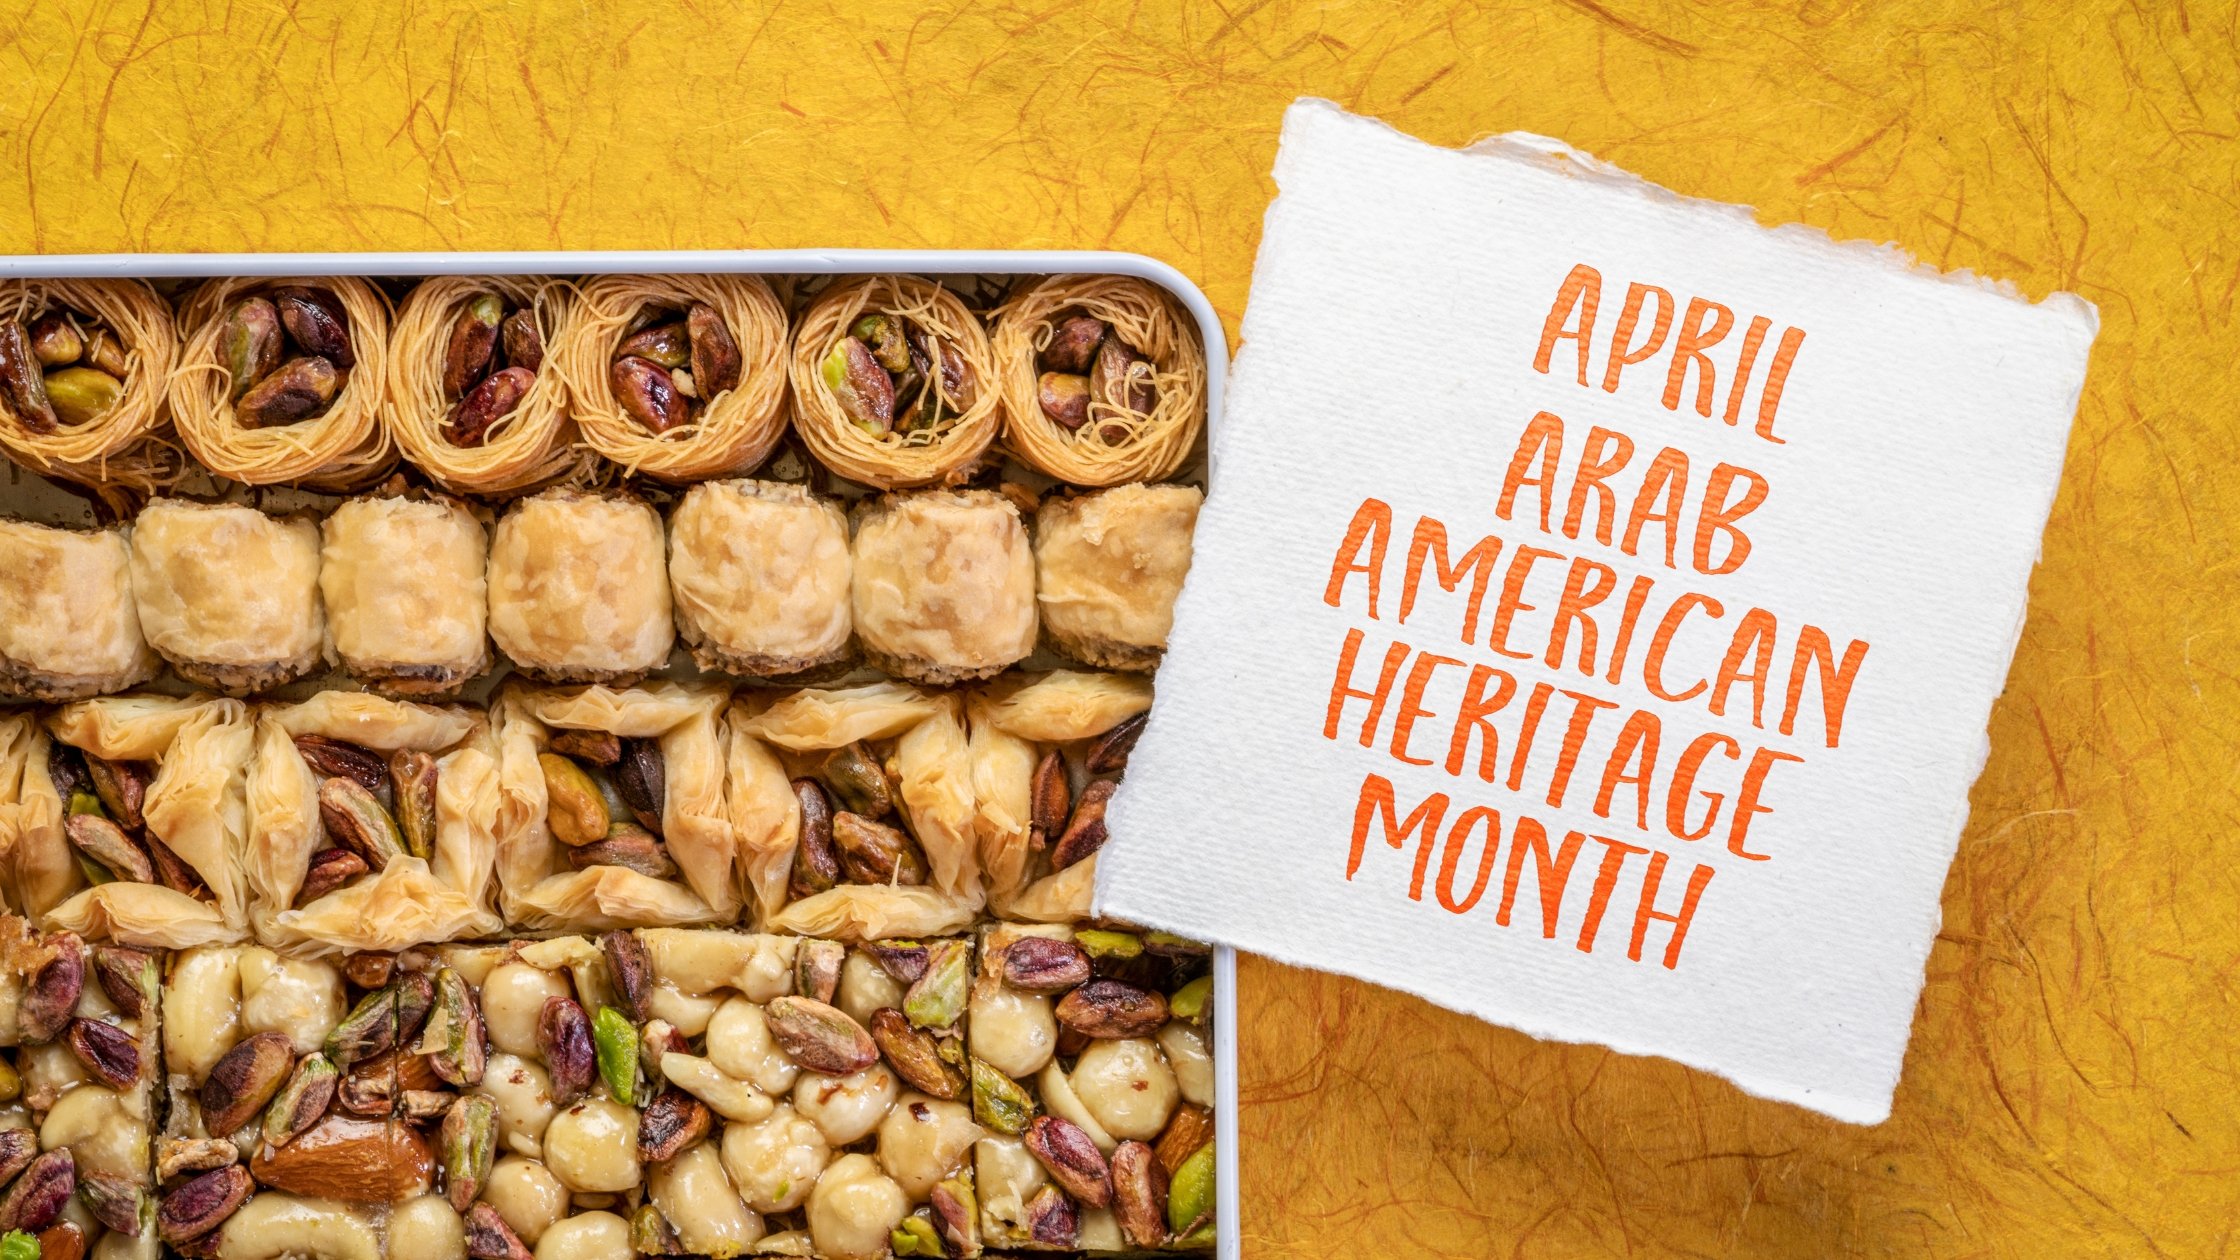 Arab American Heritage month